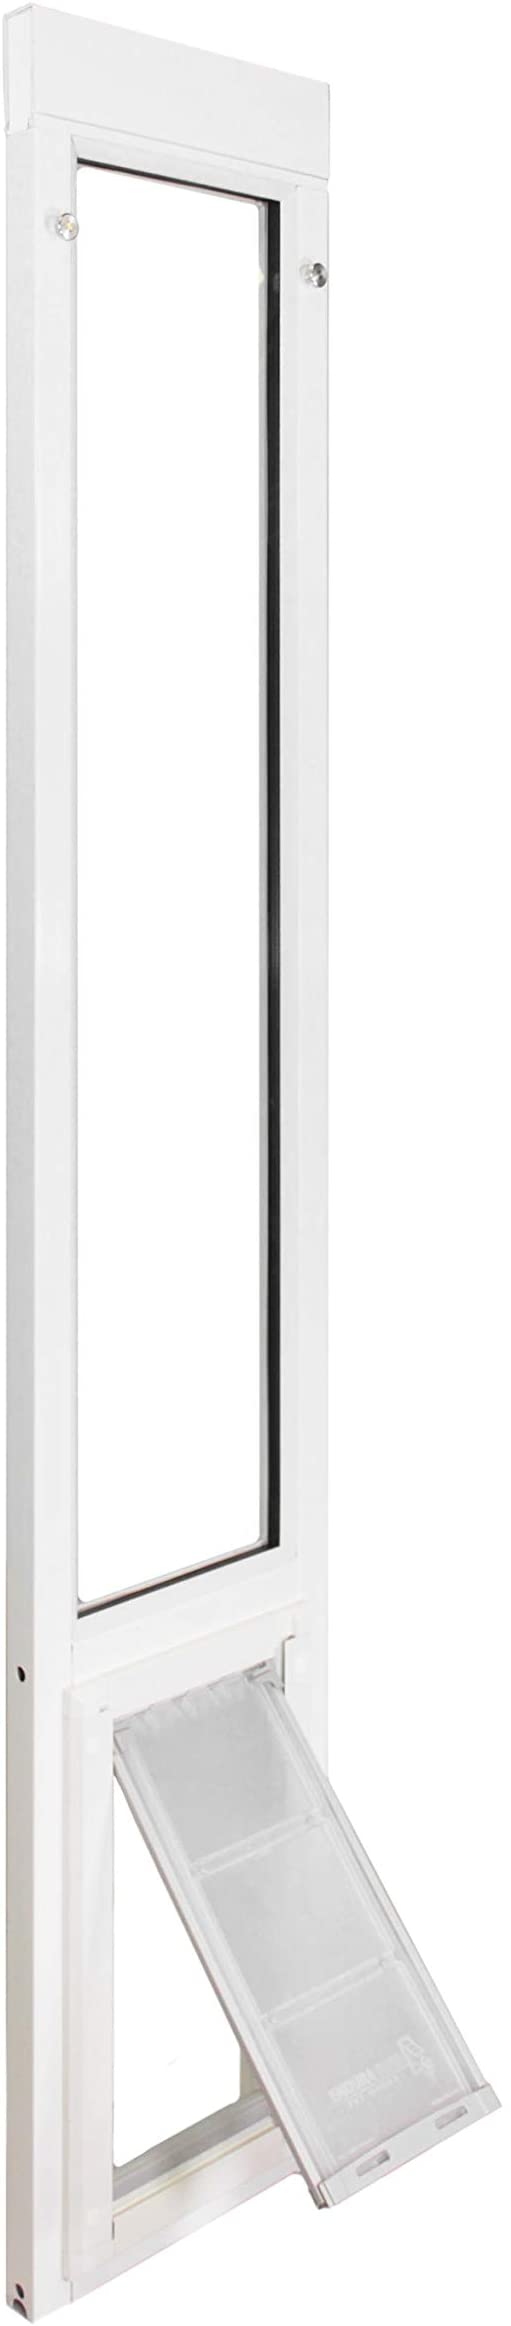 Endura Flap Vinyl Sliding Glass Dog Door, Single Flap (4 Sizes: S, M, L, XL in Height ranges from 74.75" - 80.25")